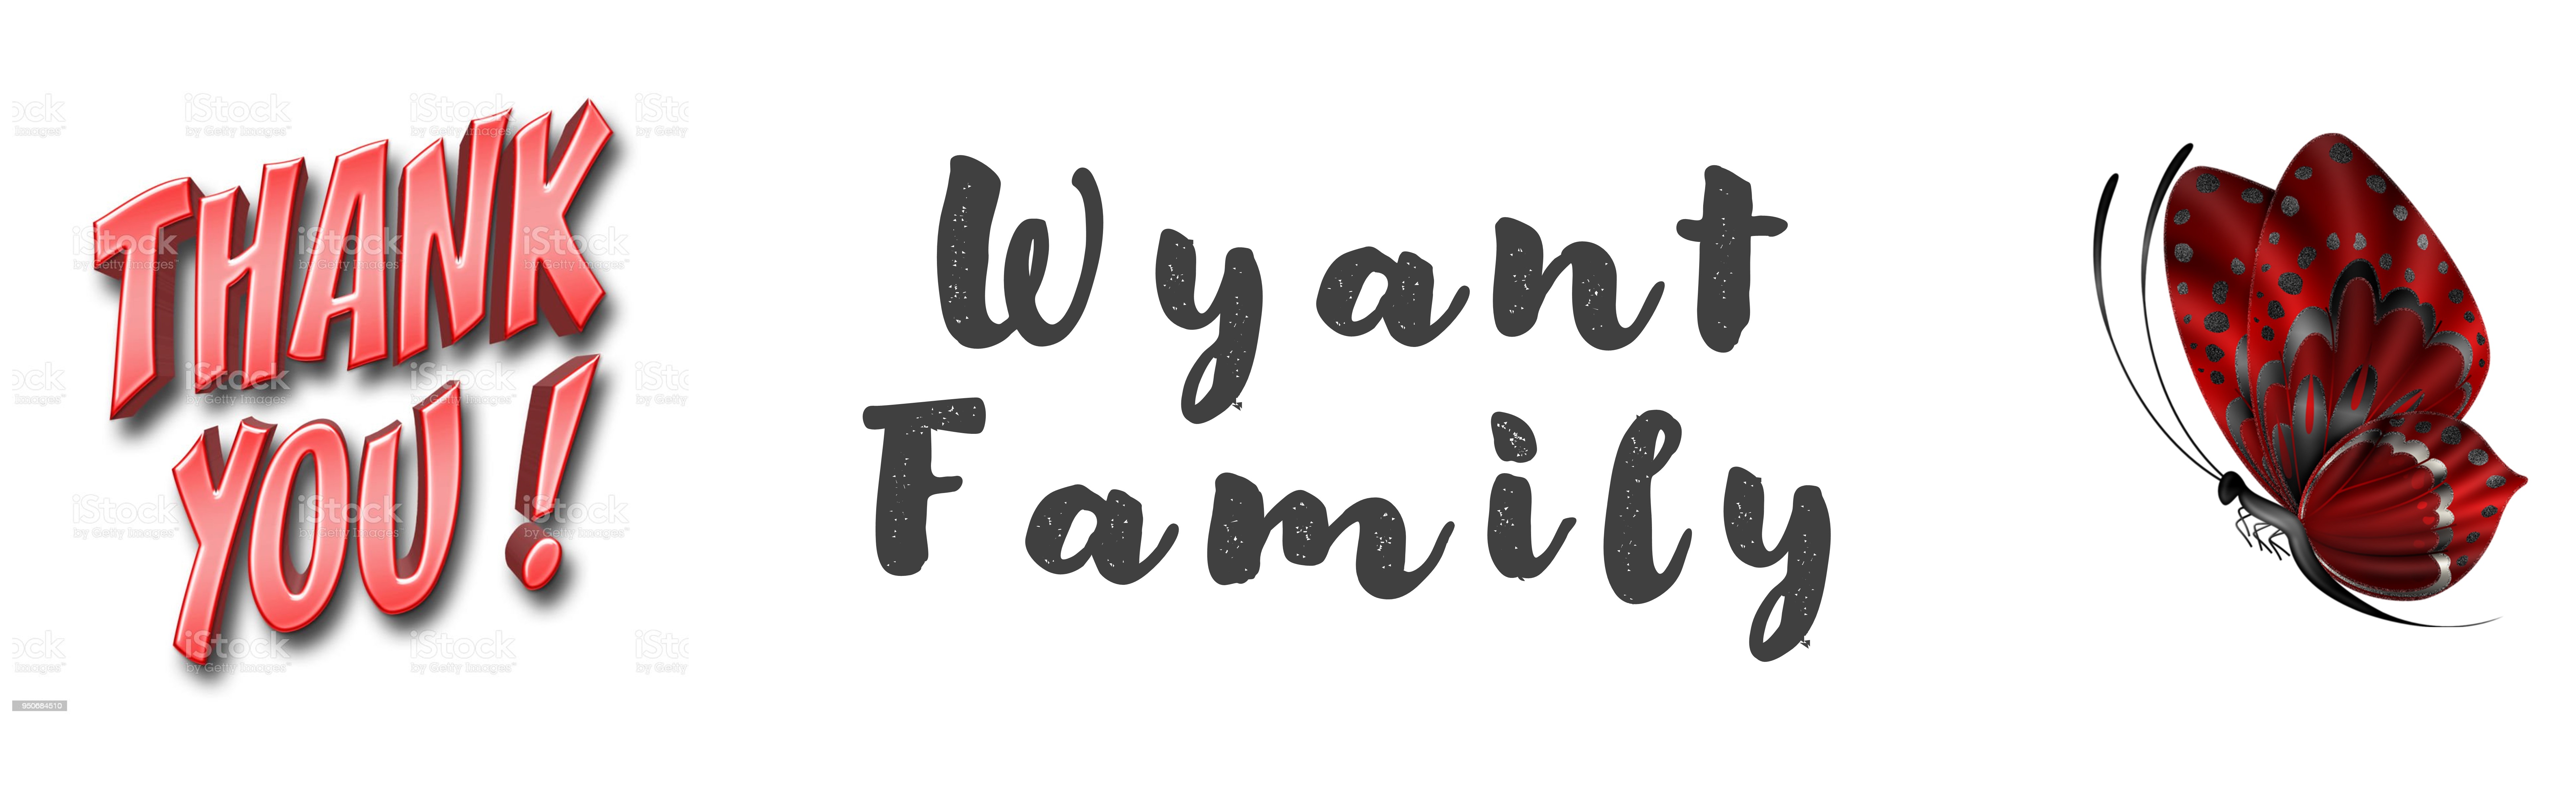 Wyant Family